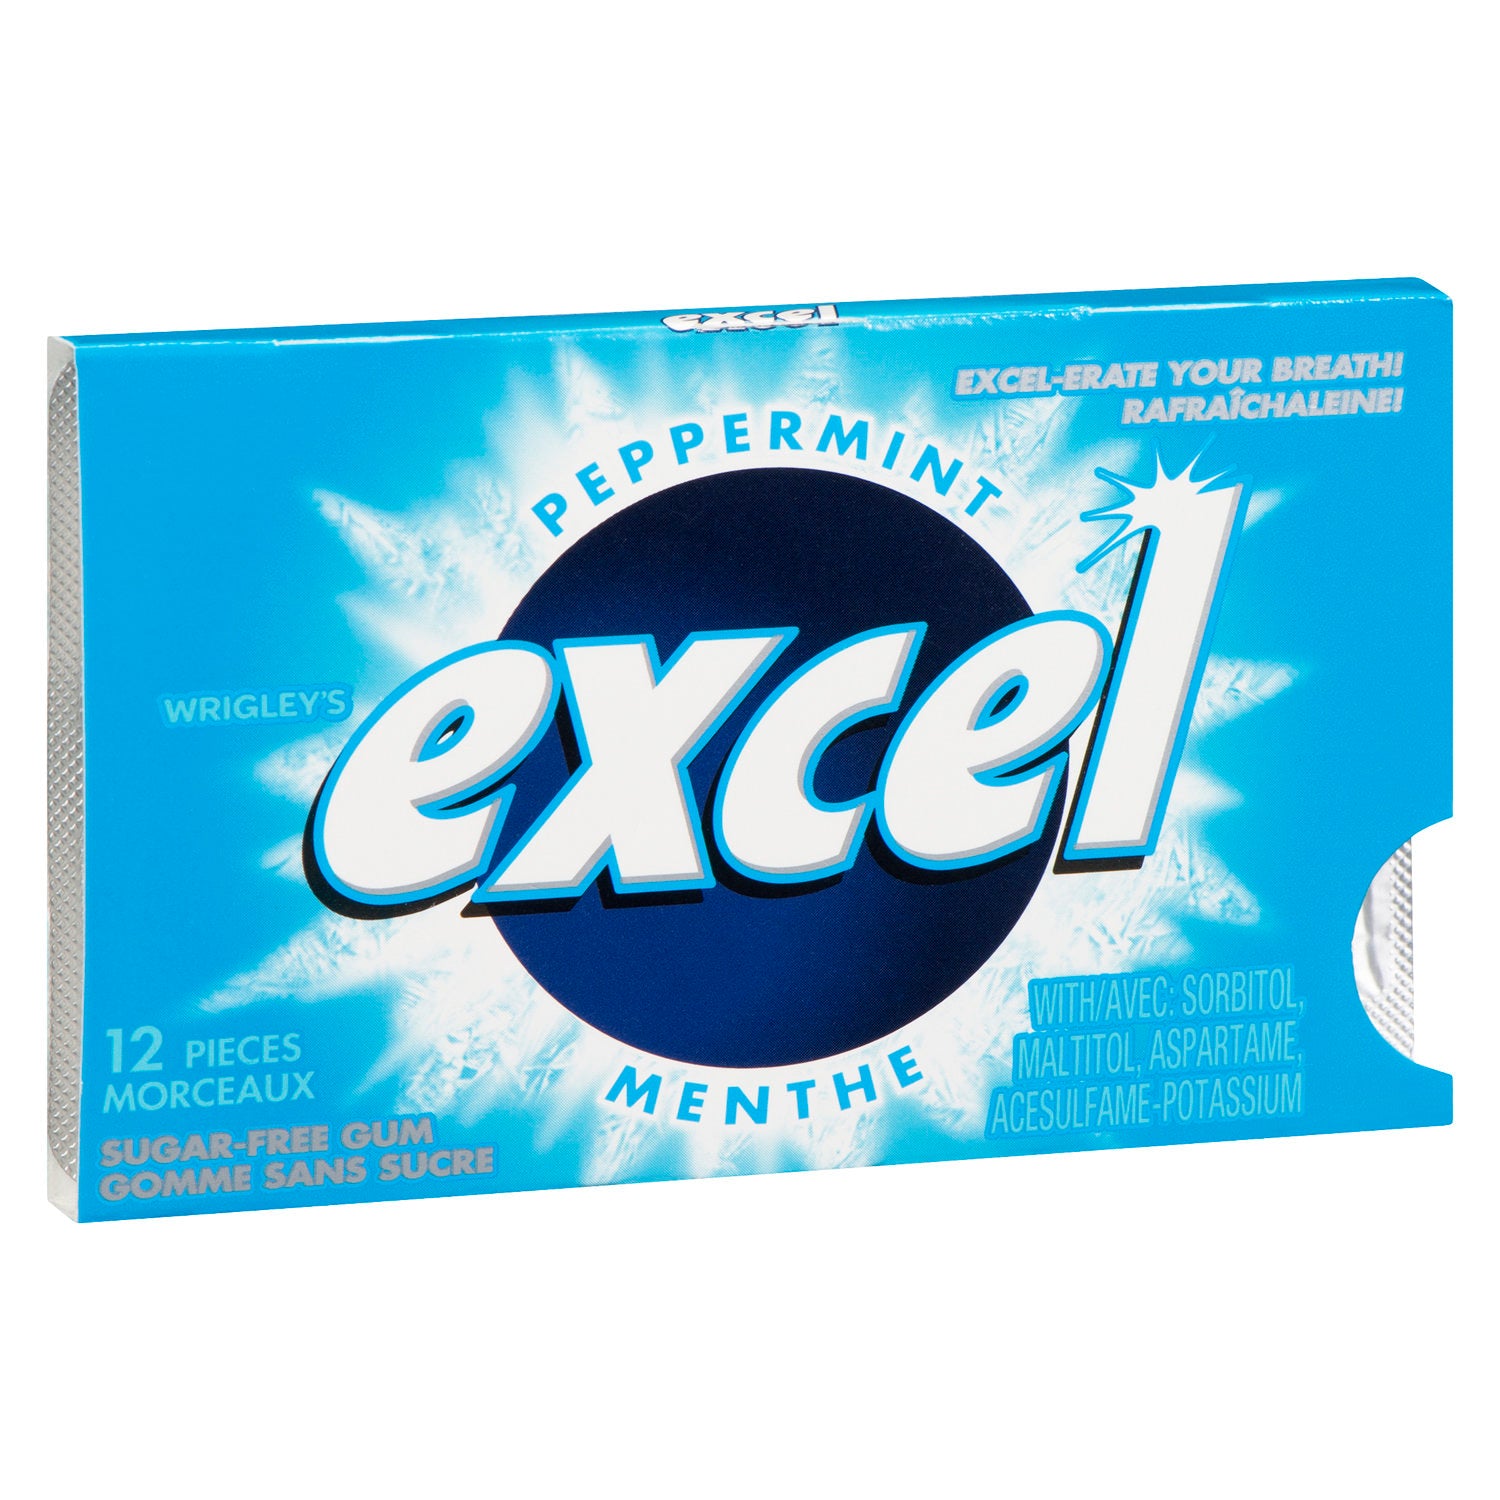 Excel Peppermint Gum